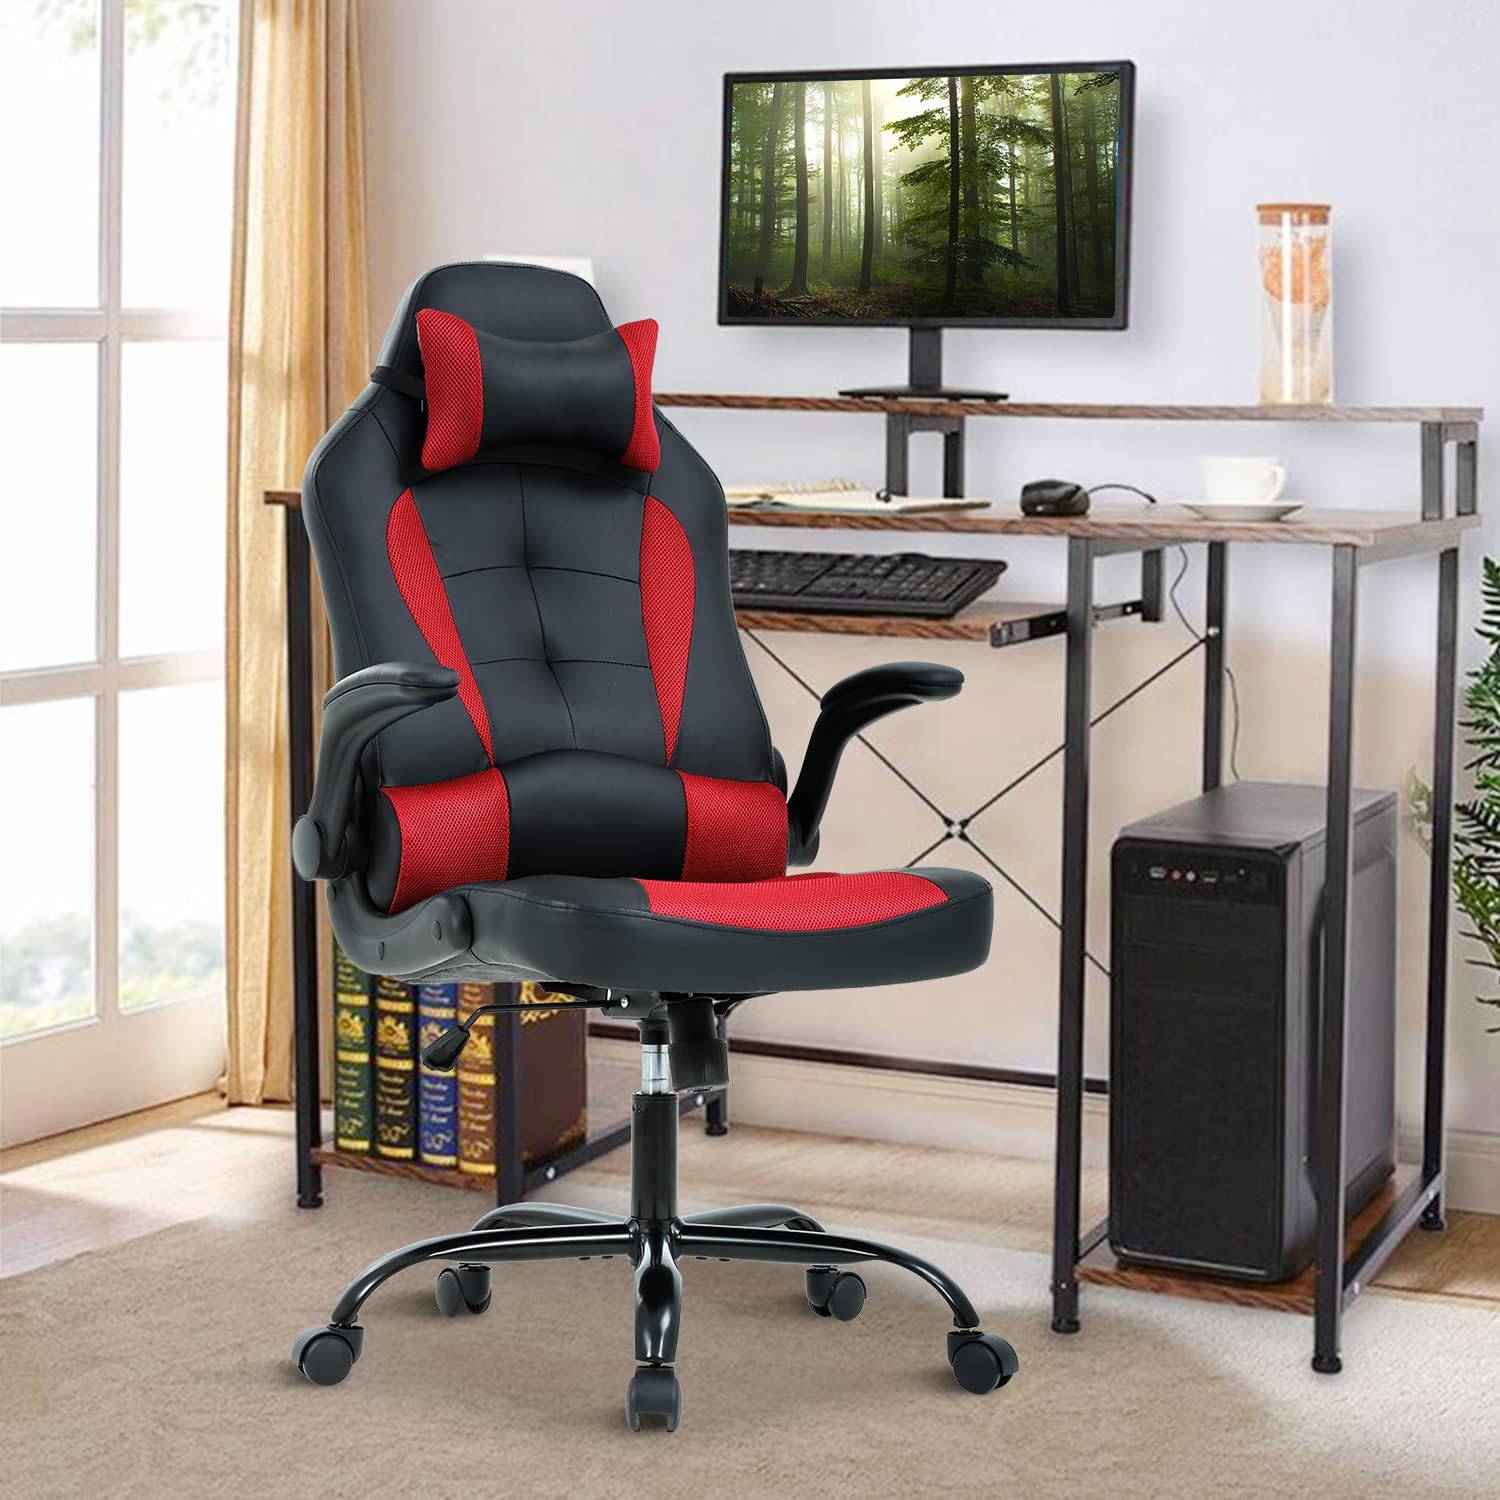 Silla para videojuegos, silla de videojuegos, silla de juegos de  computadora barata, silla de juegos de piel sintética, respaldo alto, silla